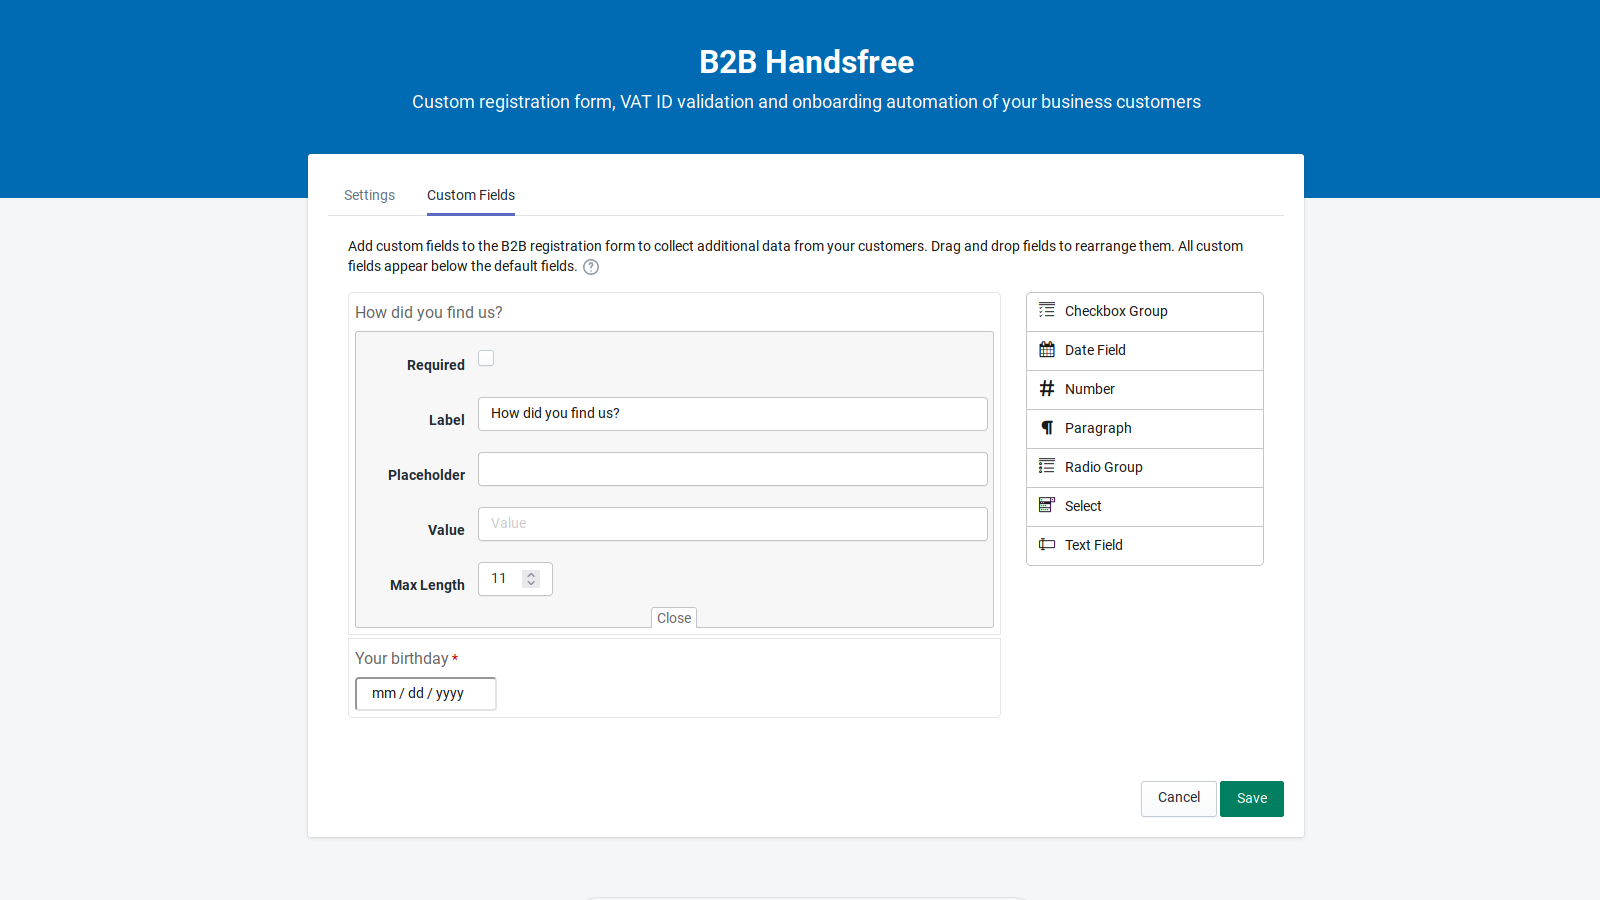 B2B Handsfree Custom Fields settings page